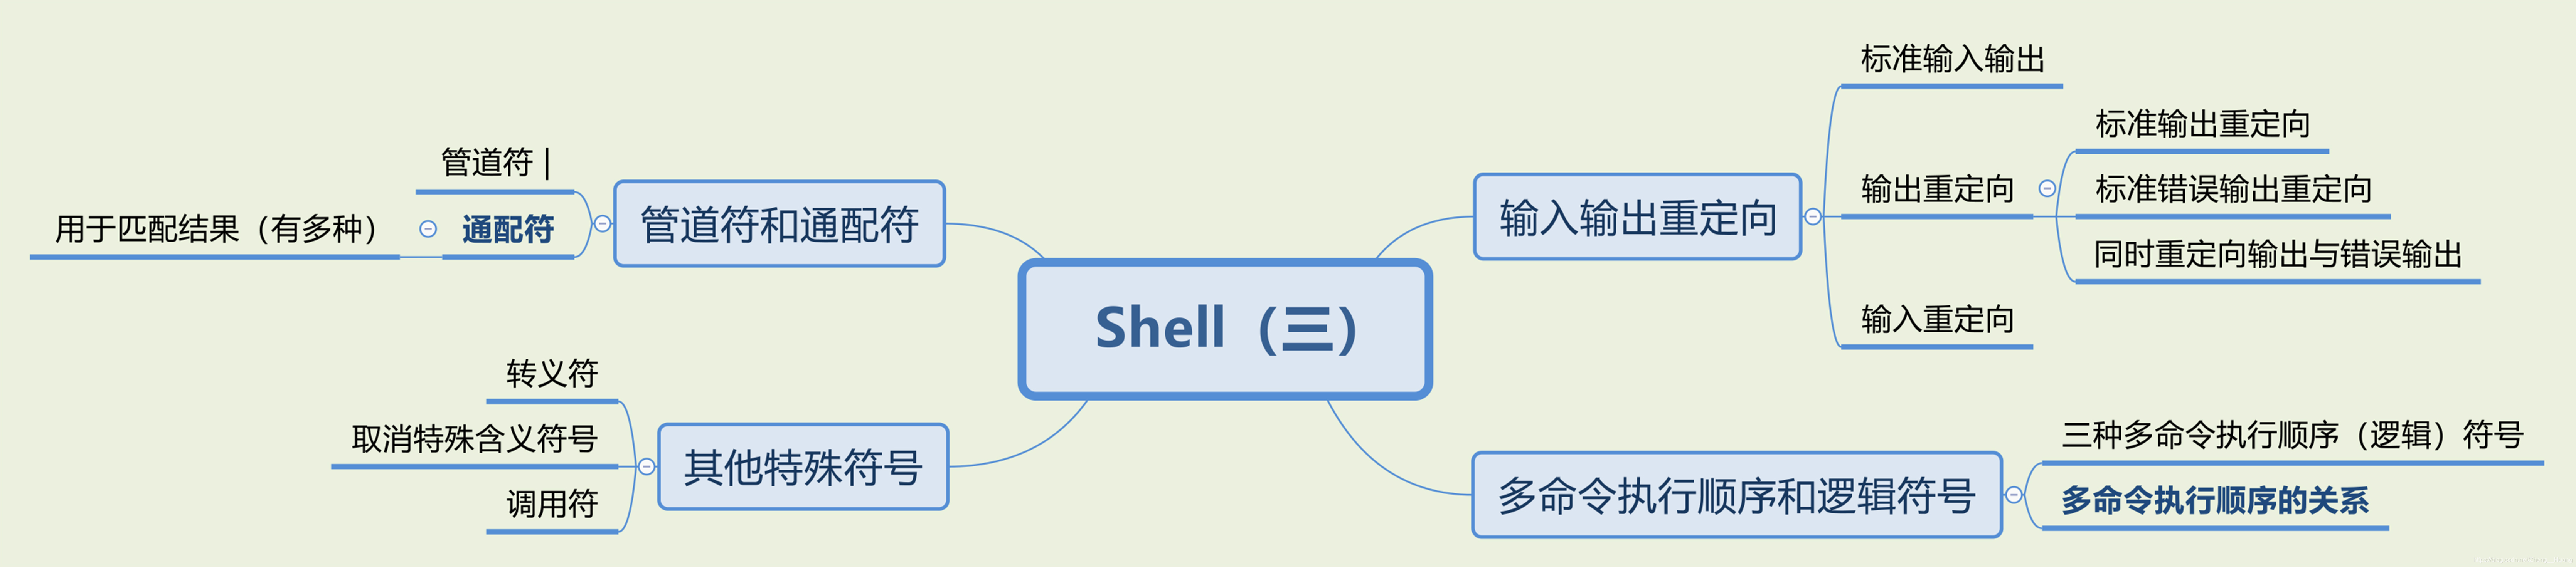 Linux Bash Shell